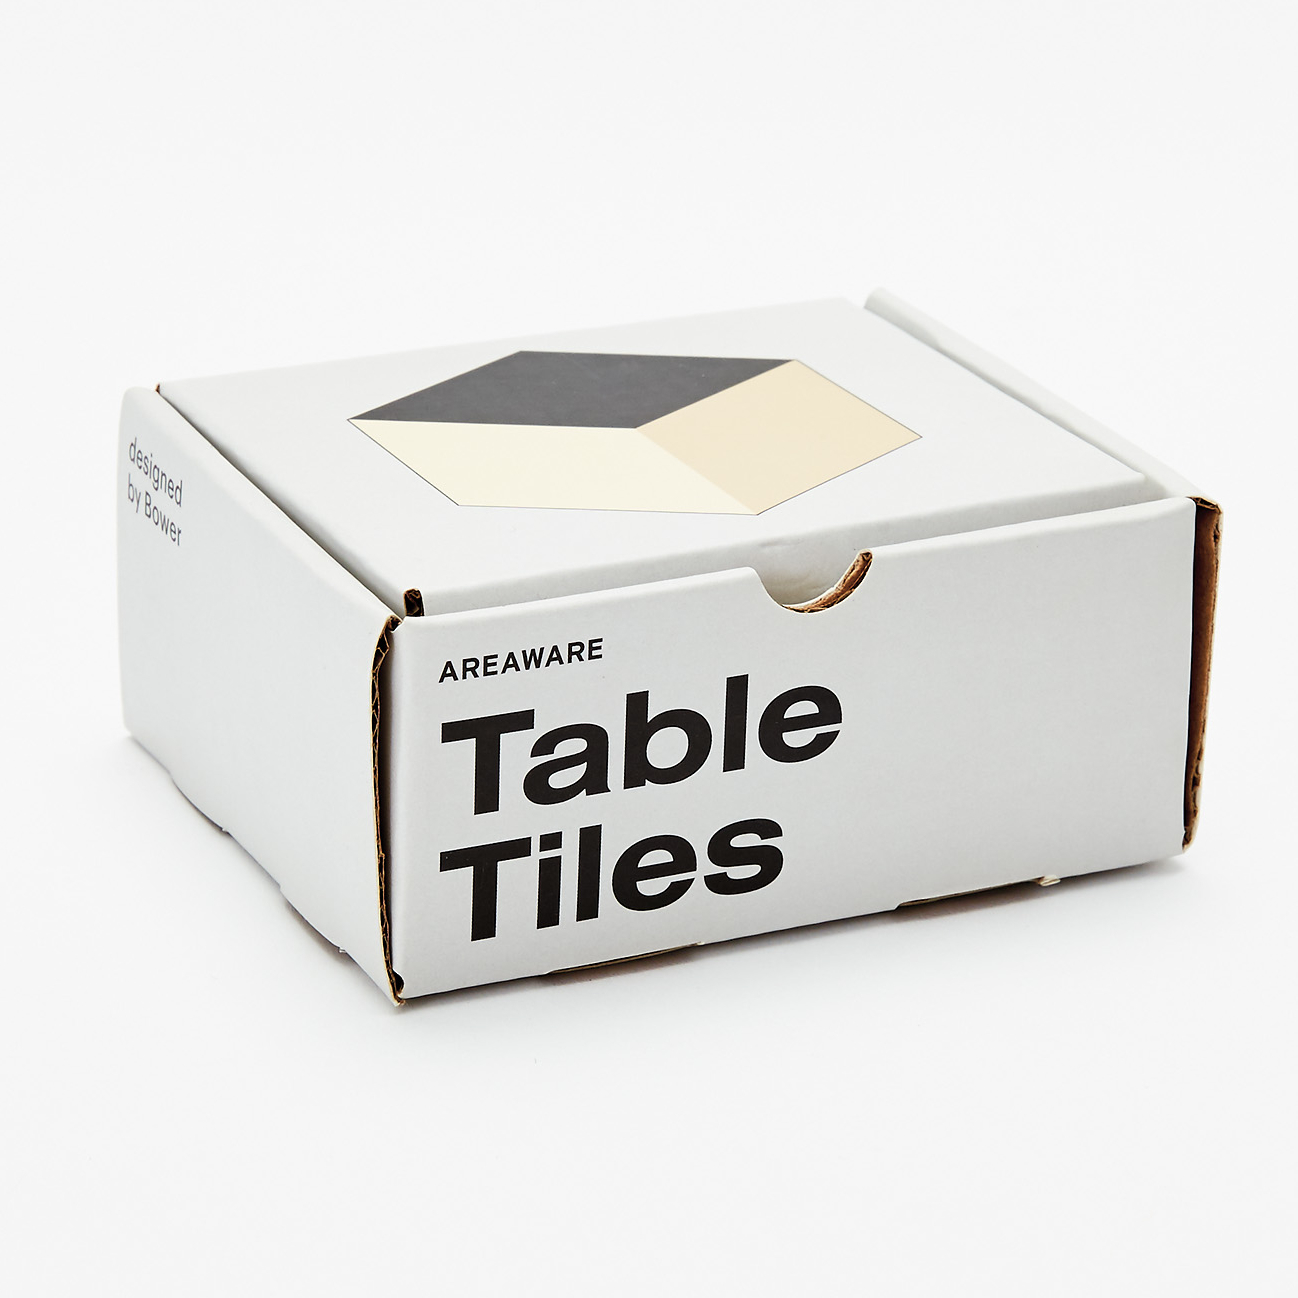 Areaware - Bower Studios - Table Tiles